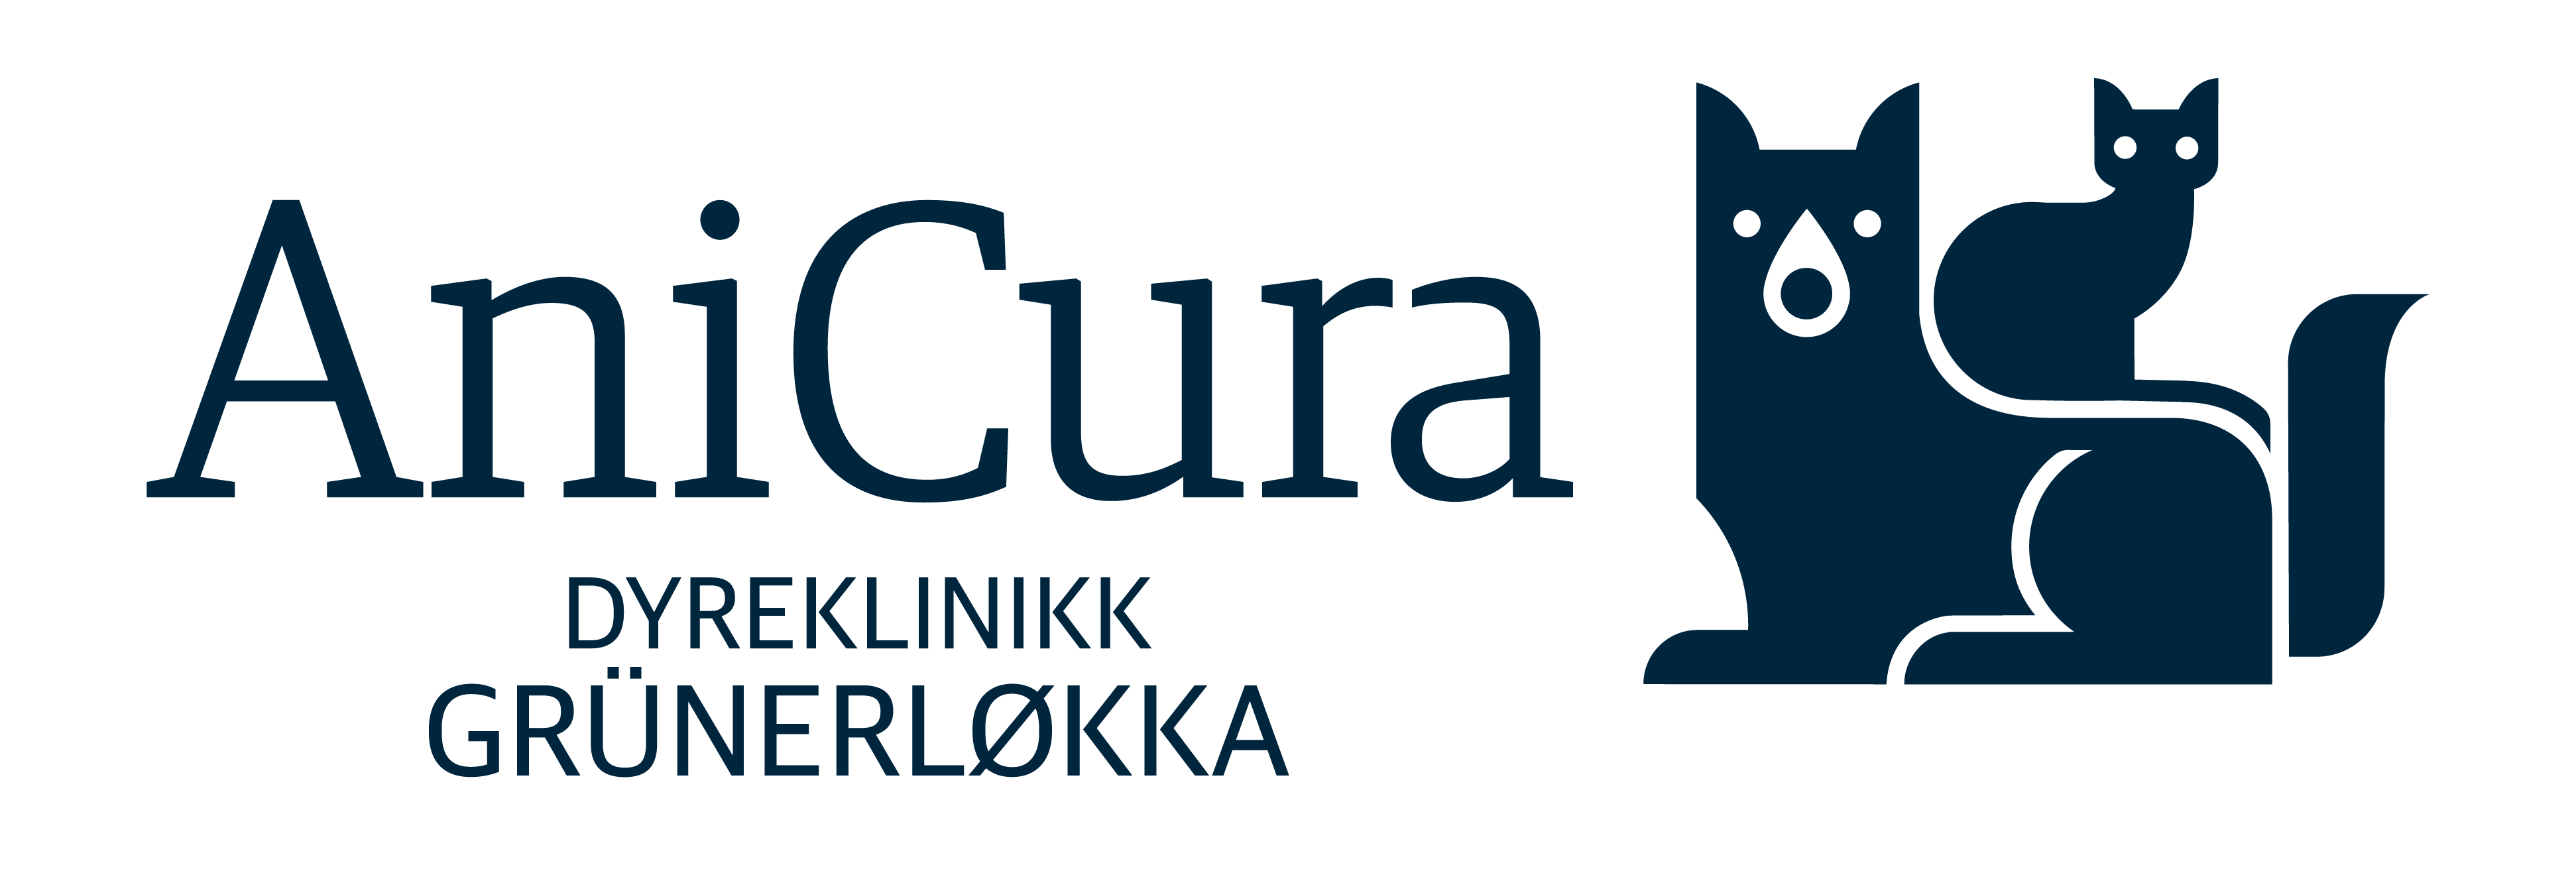 AniCura Dyreklinikk Grünerløkka logo